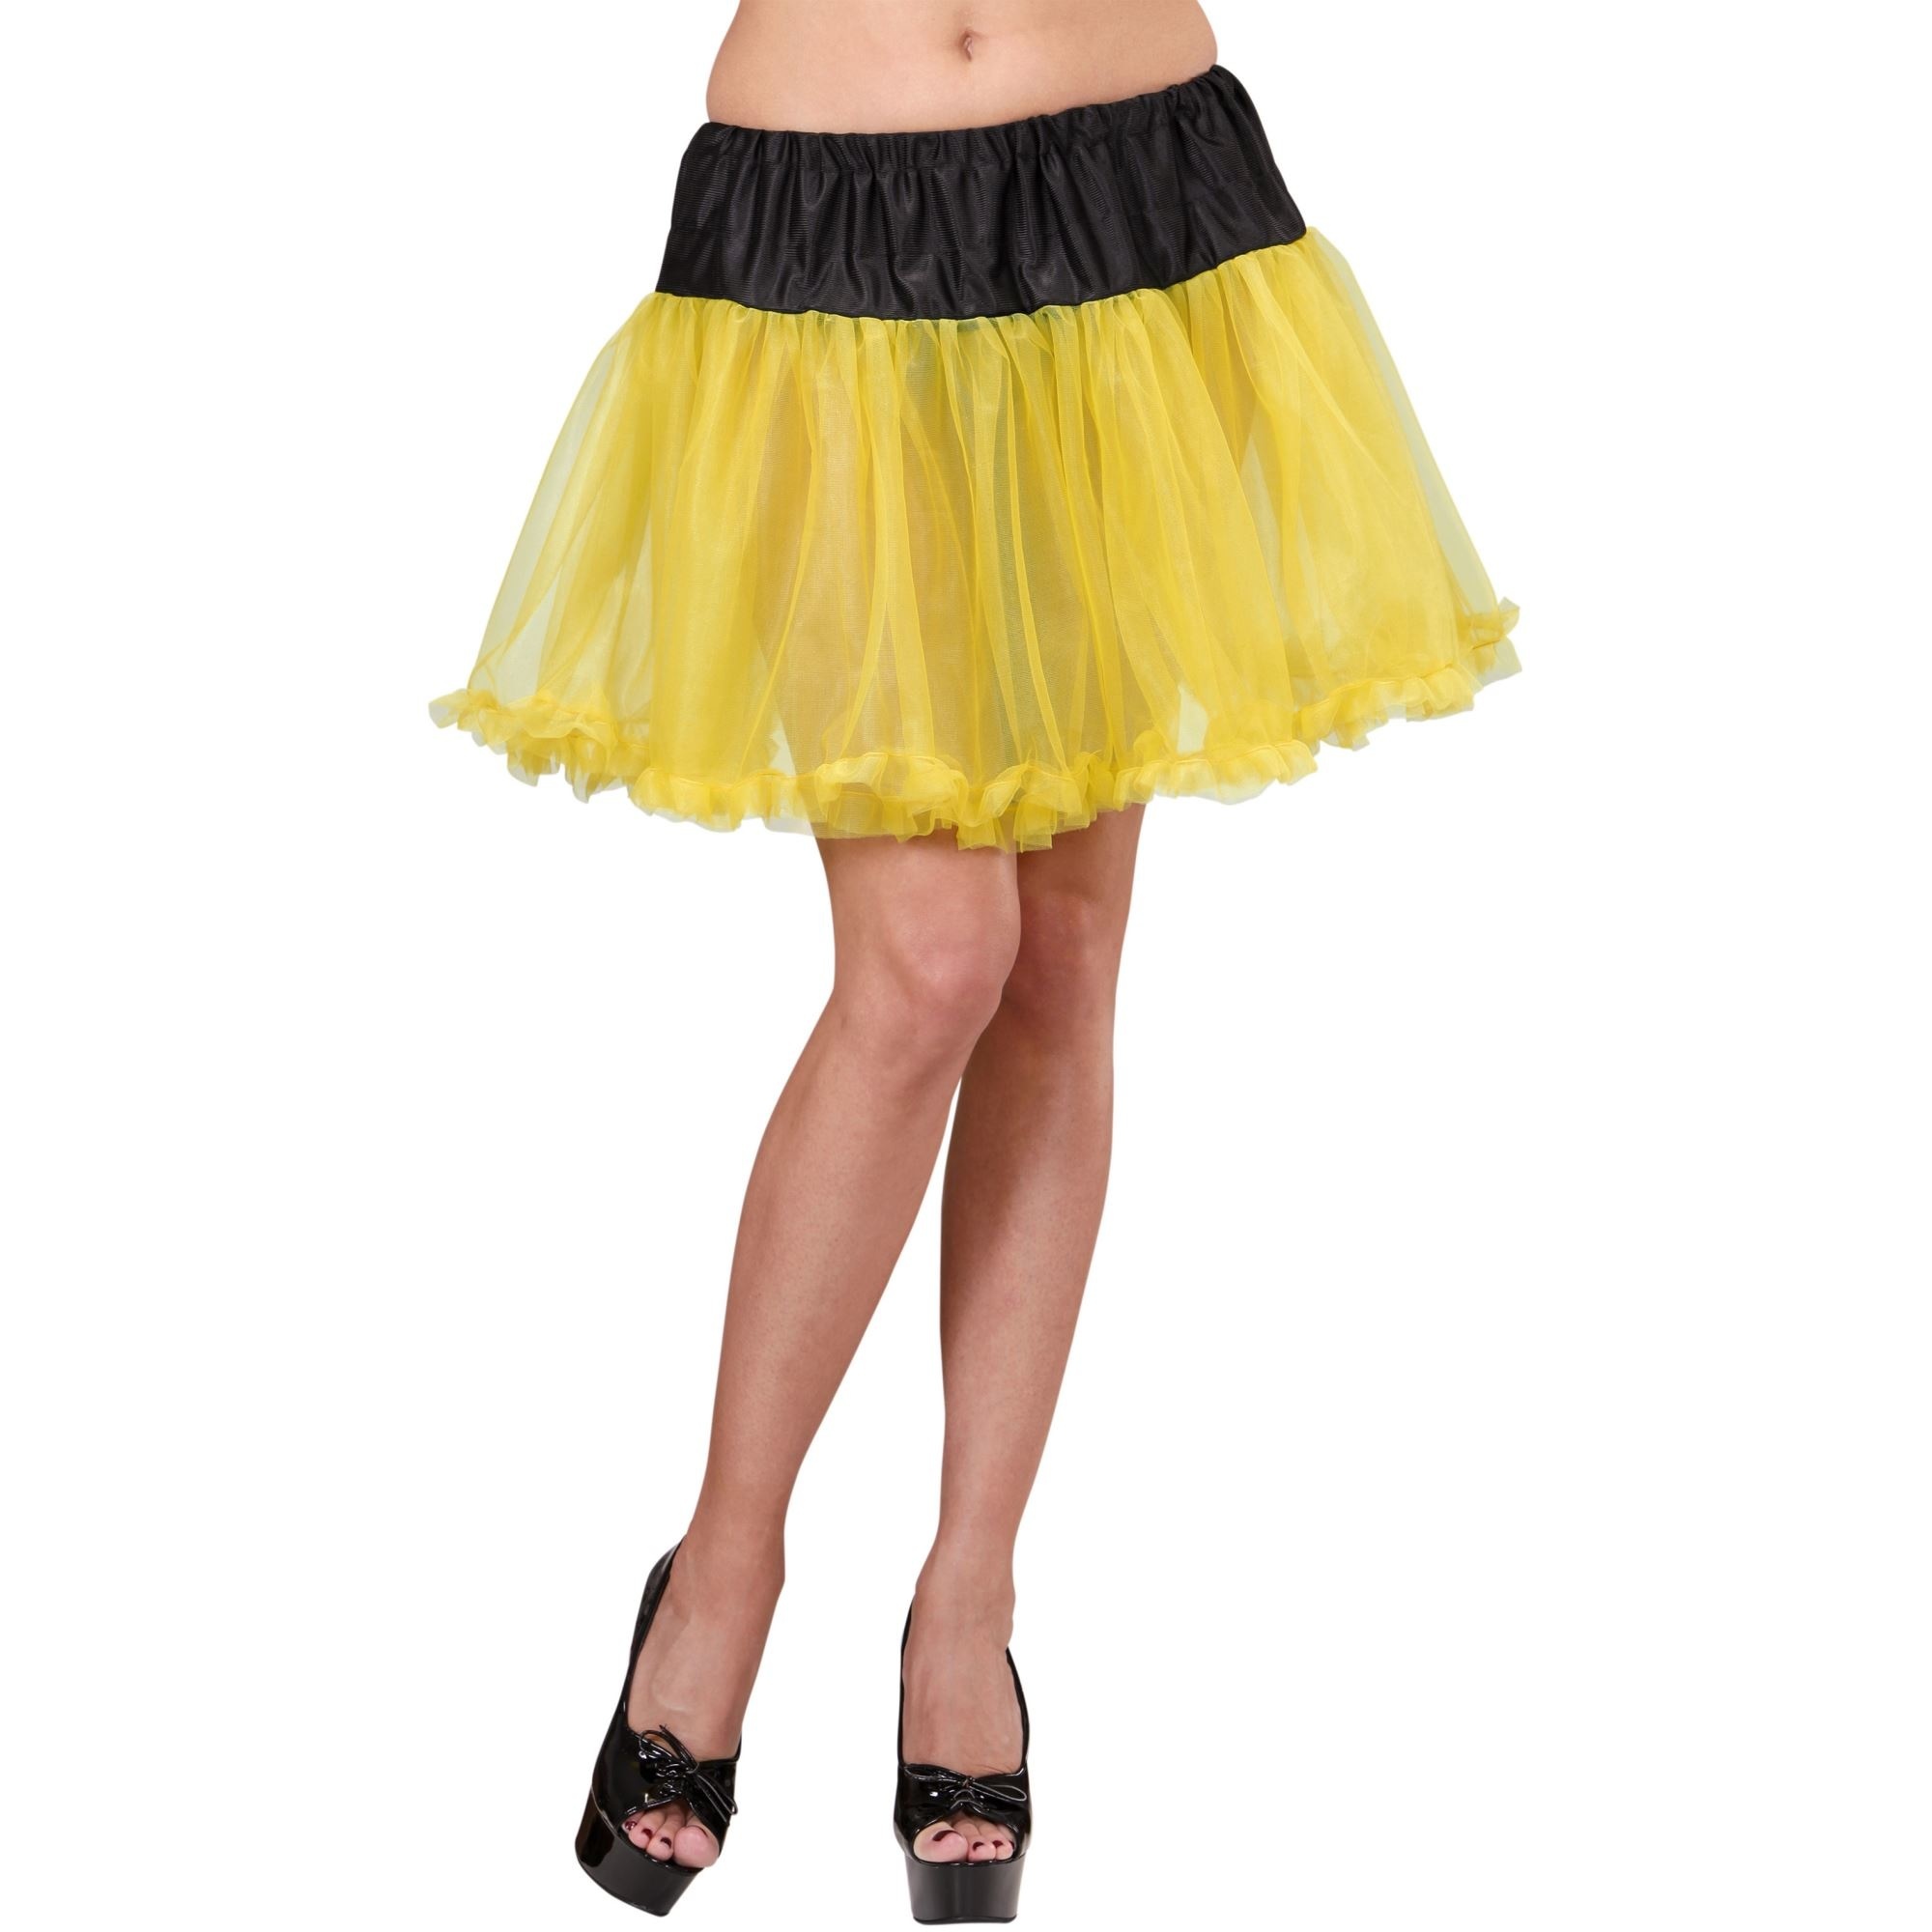 Vlek Nuttig Verlaten petticoat zwart/geel